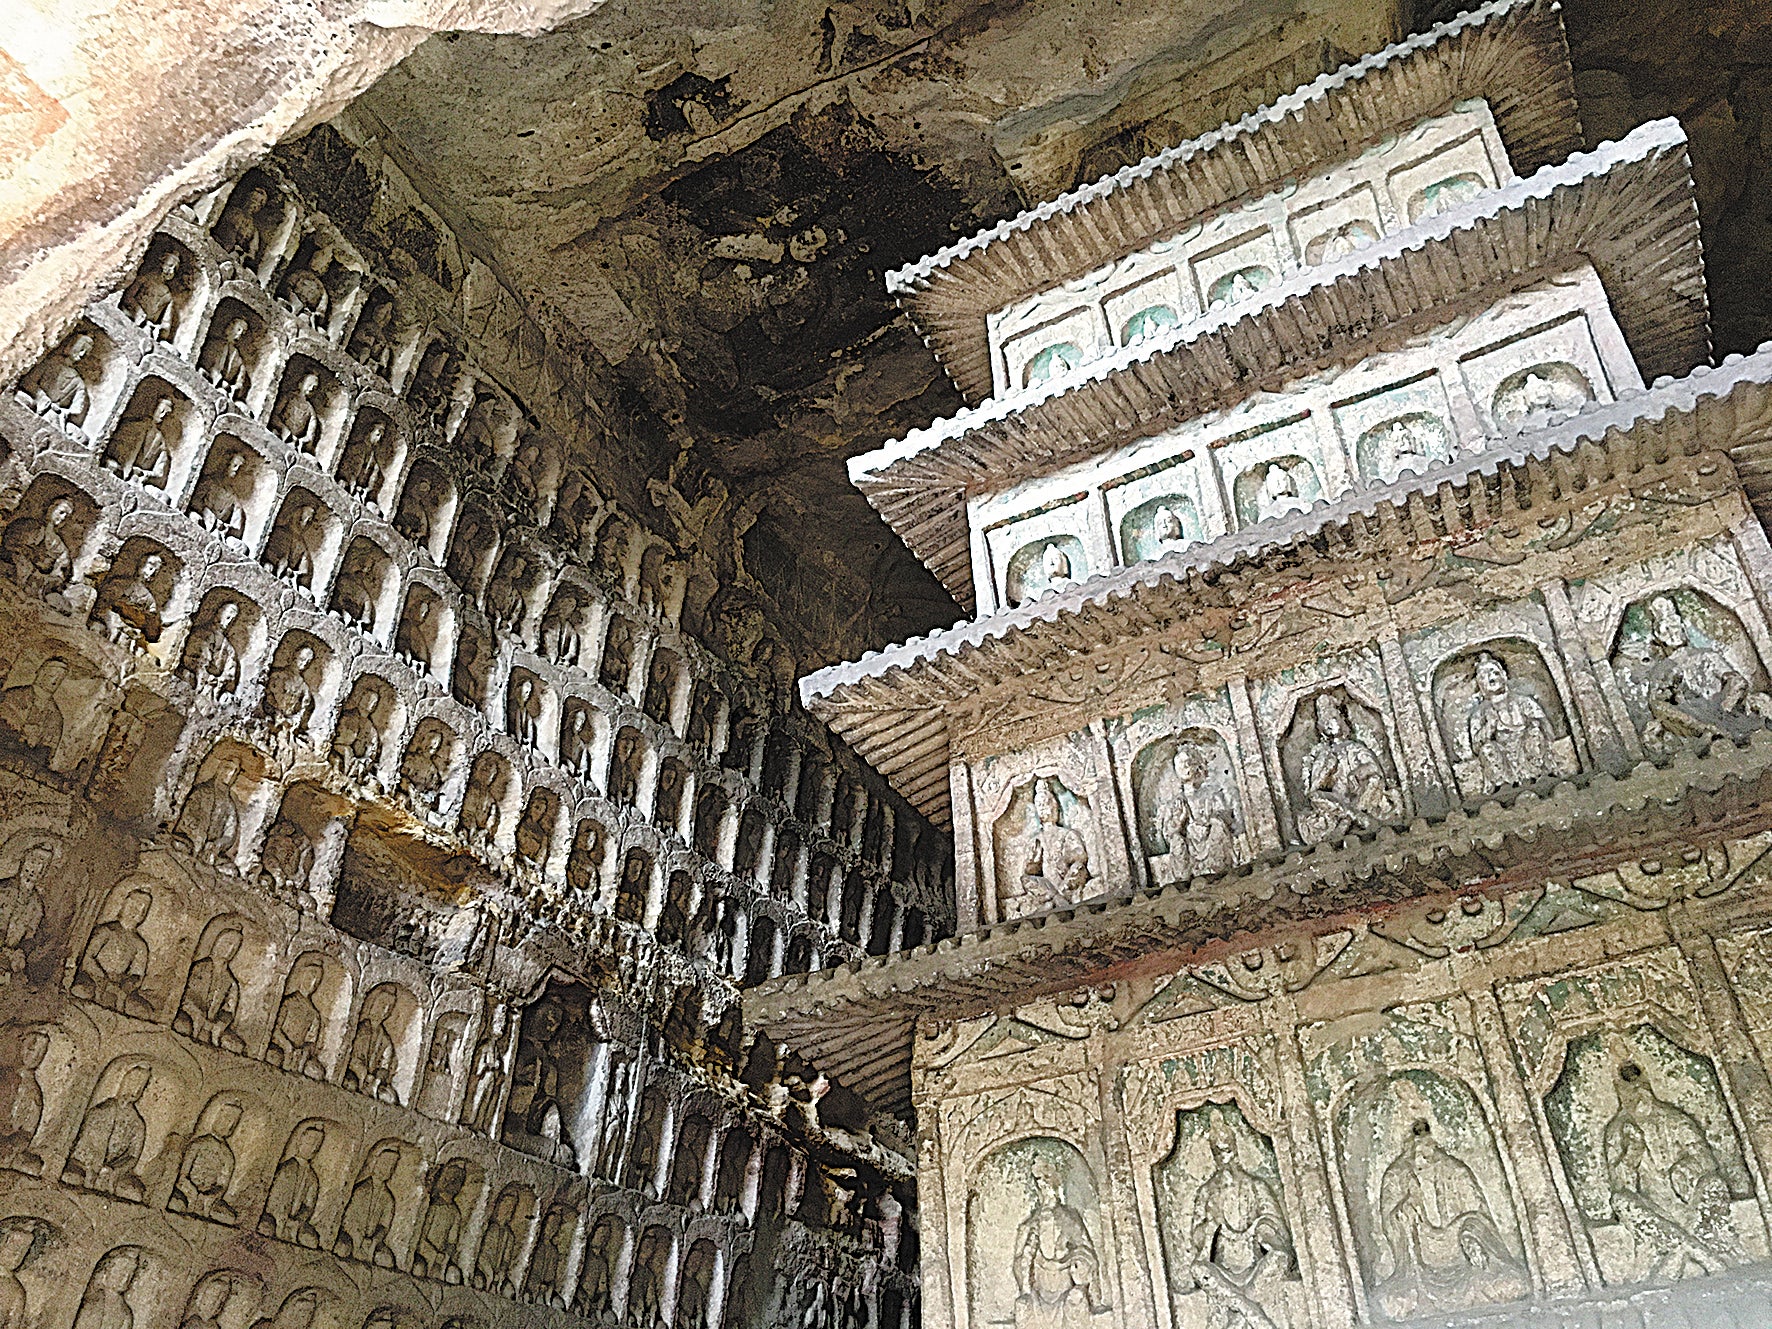 Cave 39 at the Yungang Grottoes